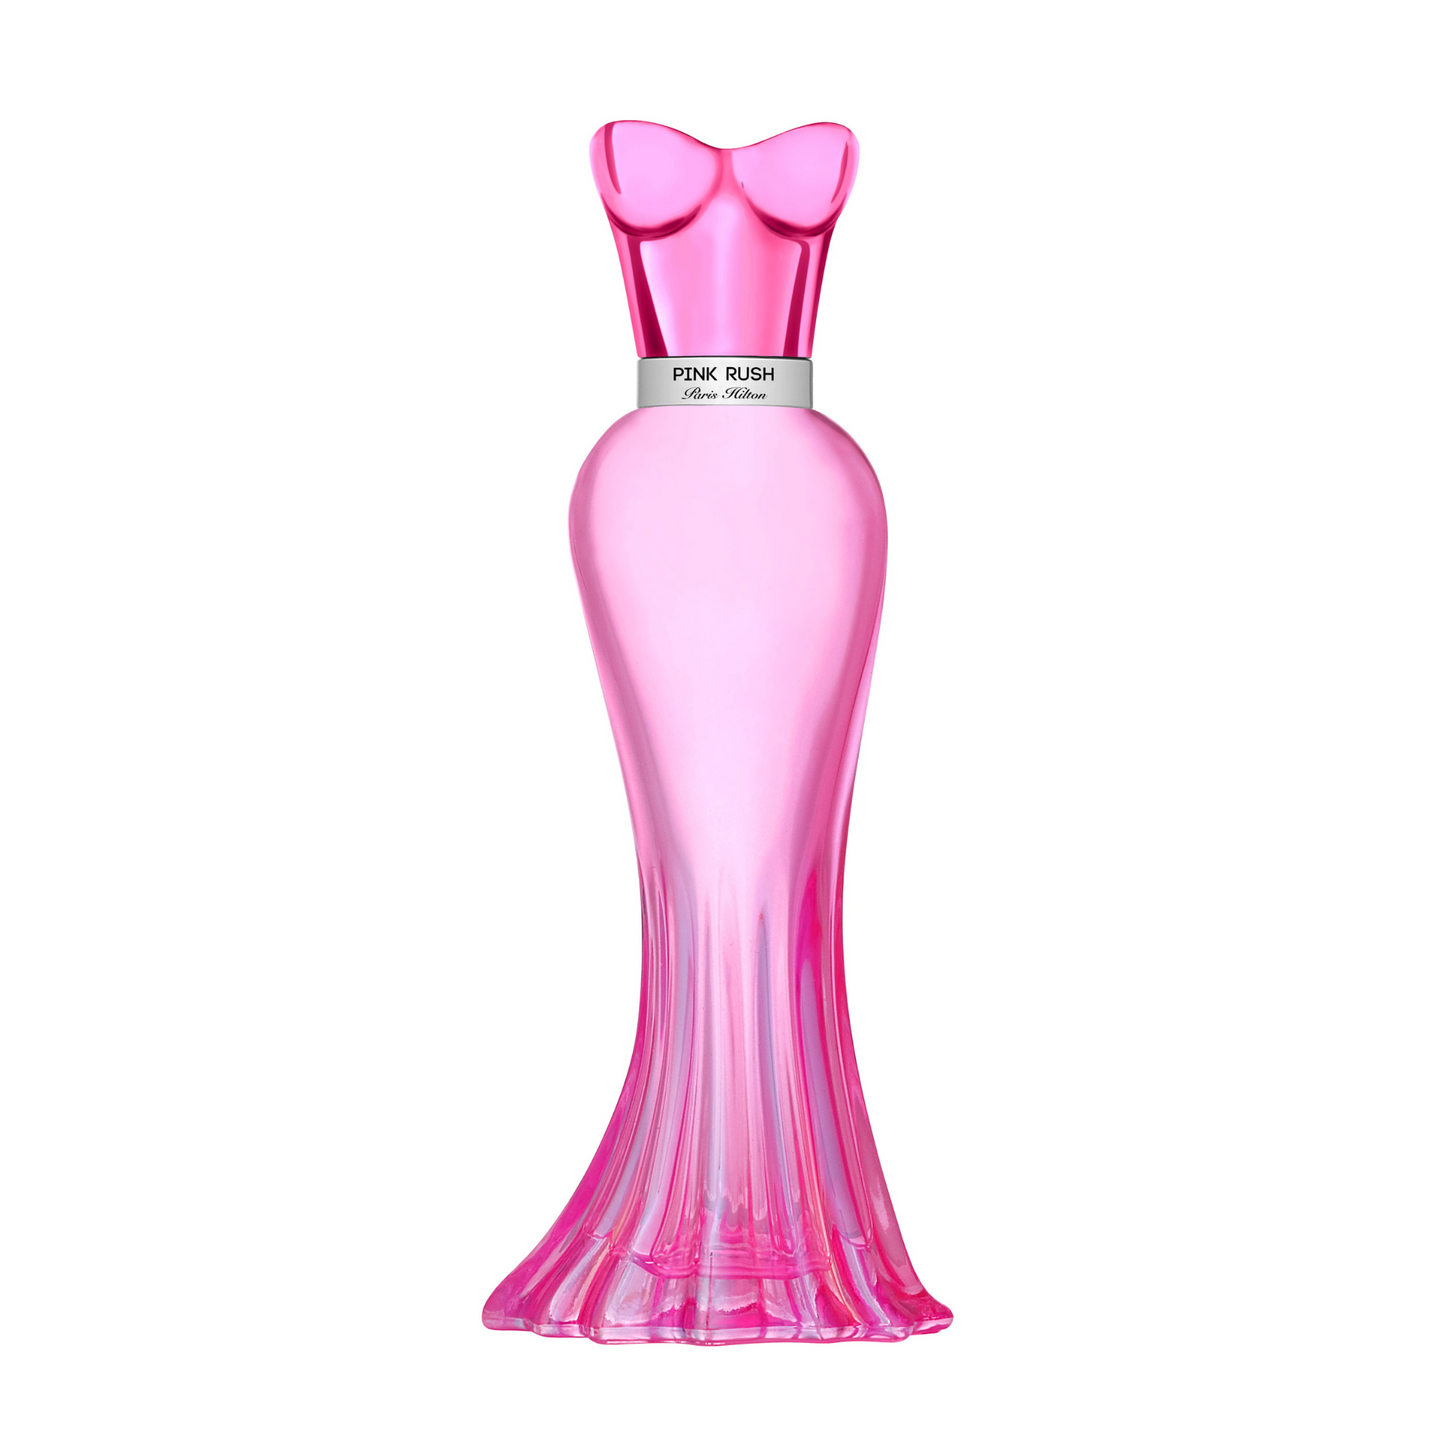 Pink Rush 3.4oz by Paris Hilton Fragrances